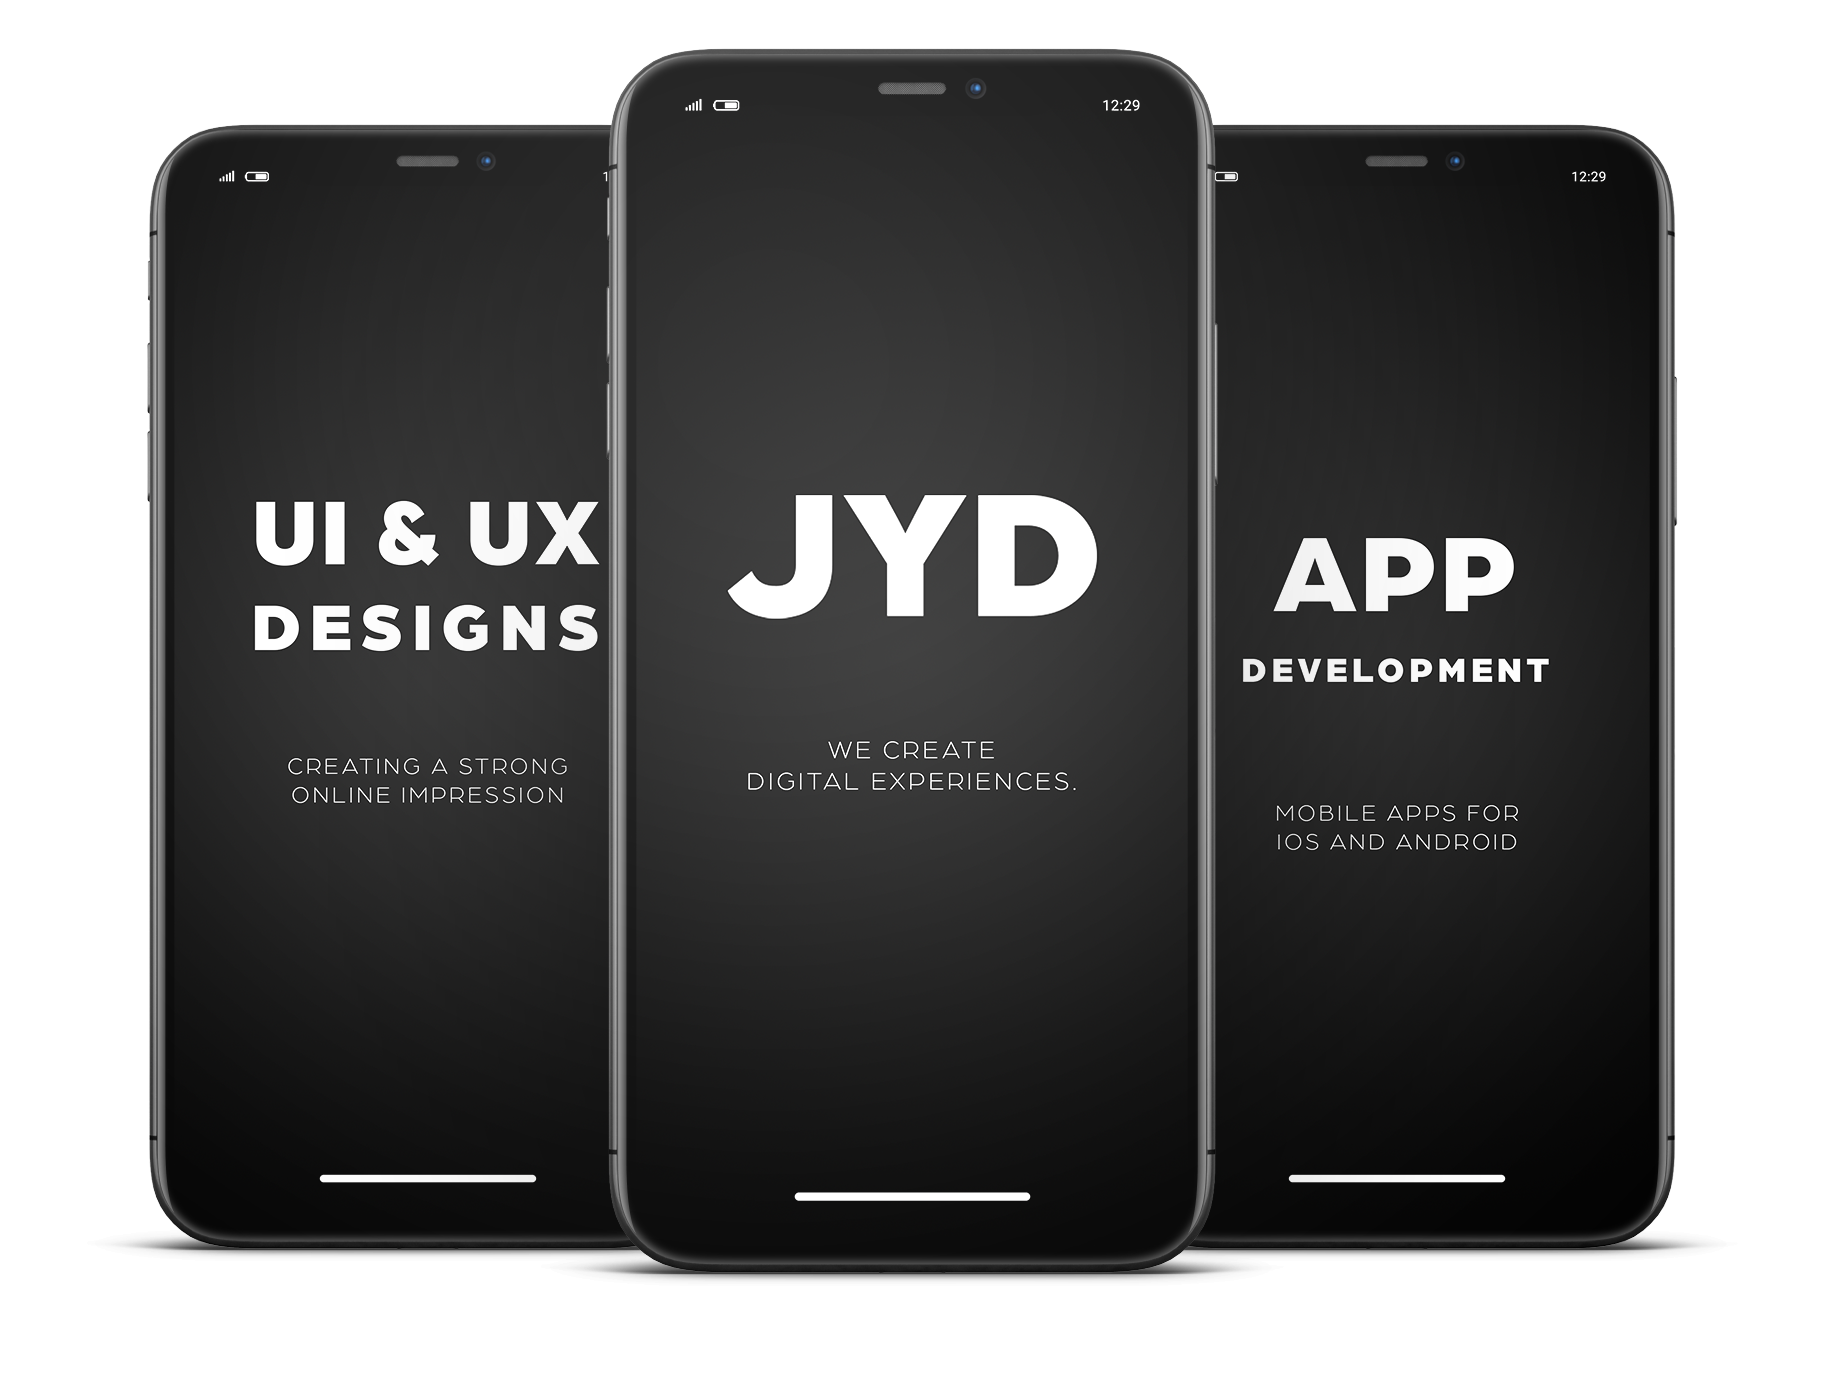 jyd-phone-screen-web-and-app-development-ui-ux-design